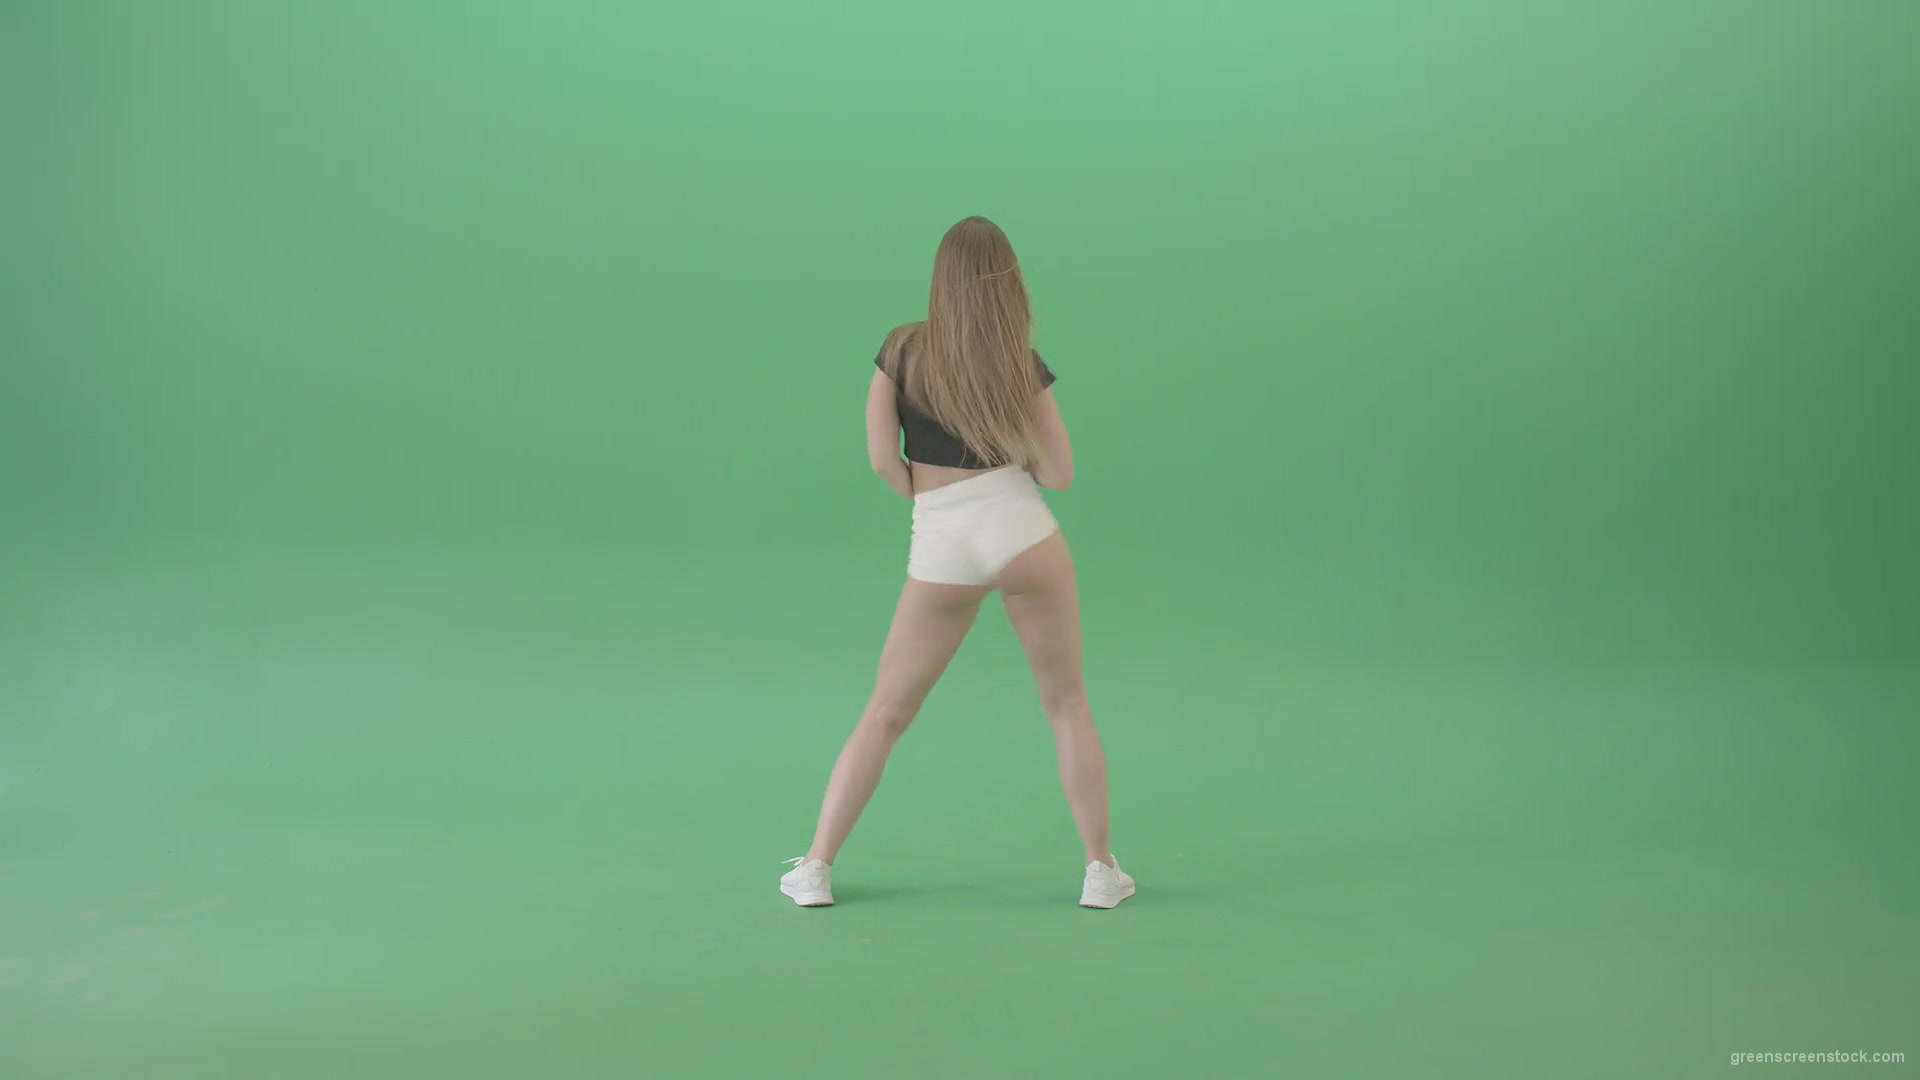 Amazing-girl-making-dancing-infinity-looping-element-twerking-hips-isolated-on-Green-Screen-4K-Video-Footage-1920_002 Green Screen Stock